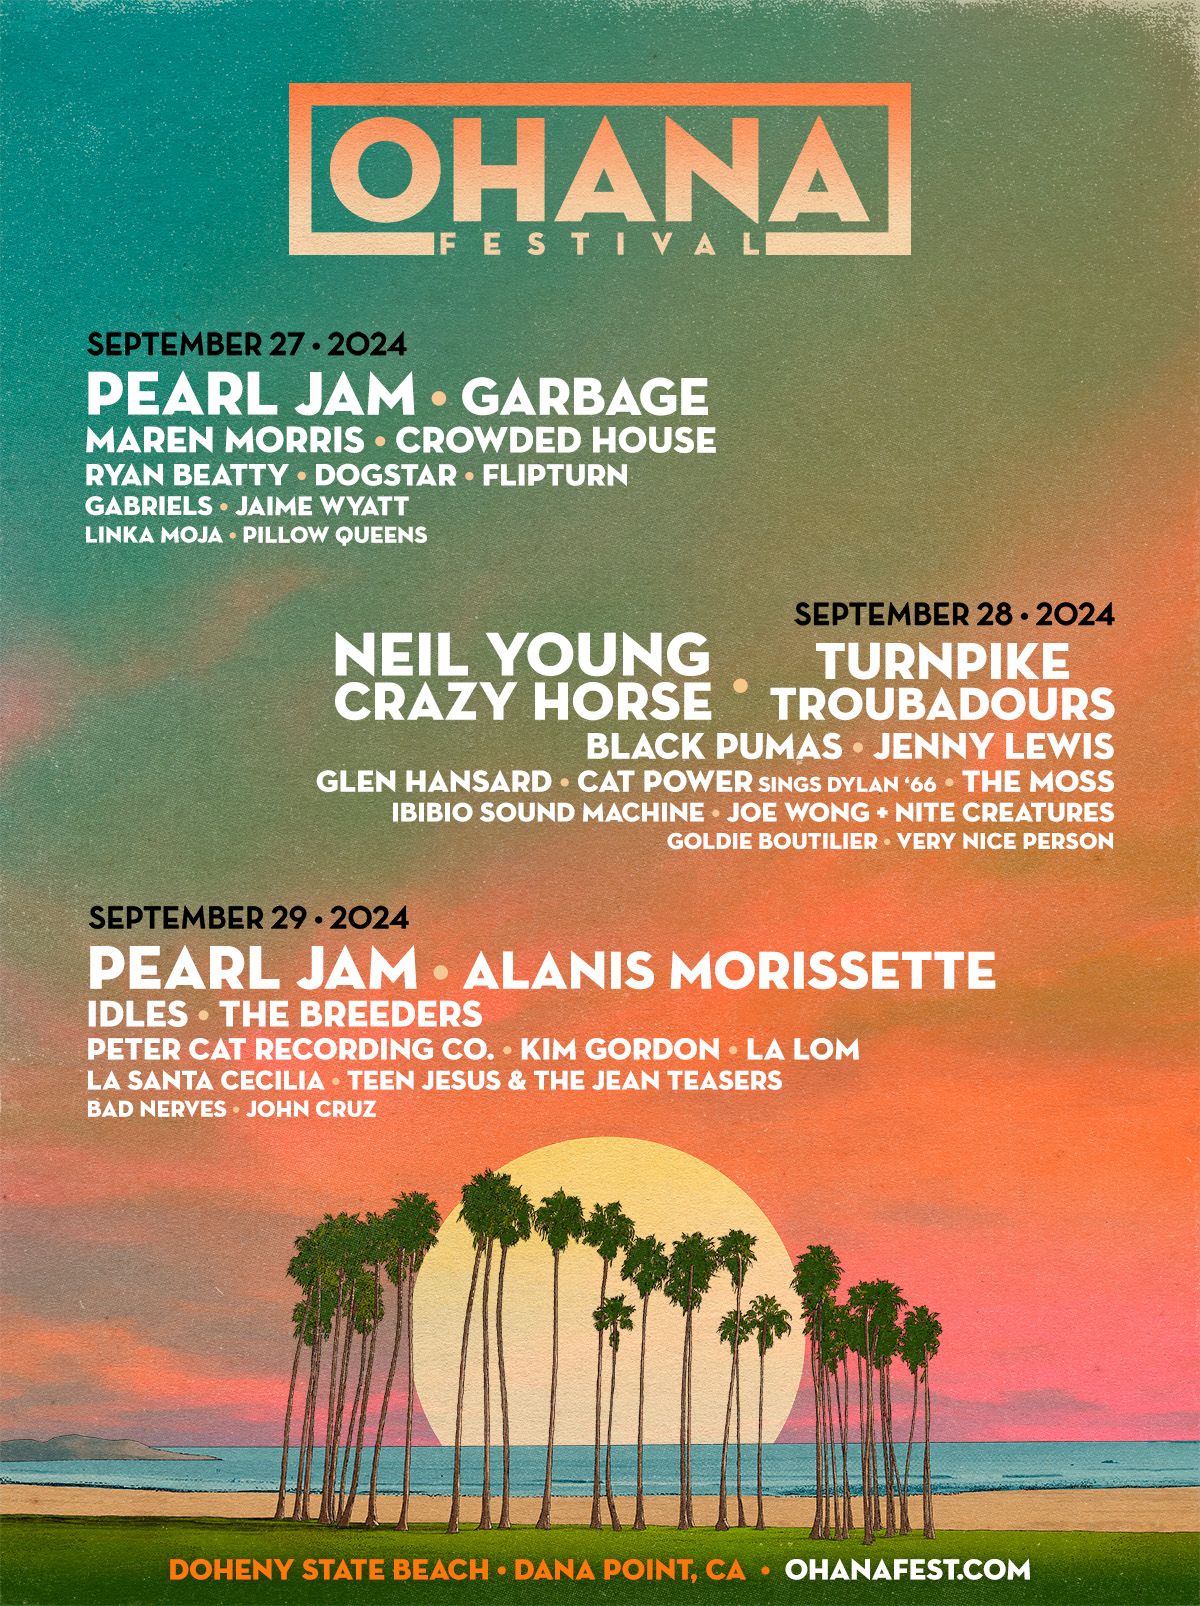 Ohana Festival 2024 Lineup: Pearl Jam (two sets), Neil Young Crazy Horse, Alan’s Morissette, Garbage, Turnpike Troubadours, Marin Morris, Crowded House, Black Pumas, Jenny Lewis, IDLES, The Breeders, Ryan Beatty, Dogstar, Flipturn, Glen Hansard, Cat Power 